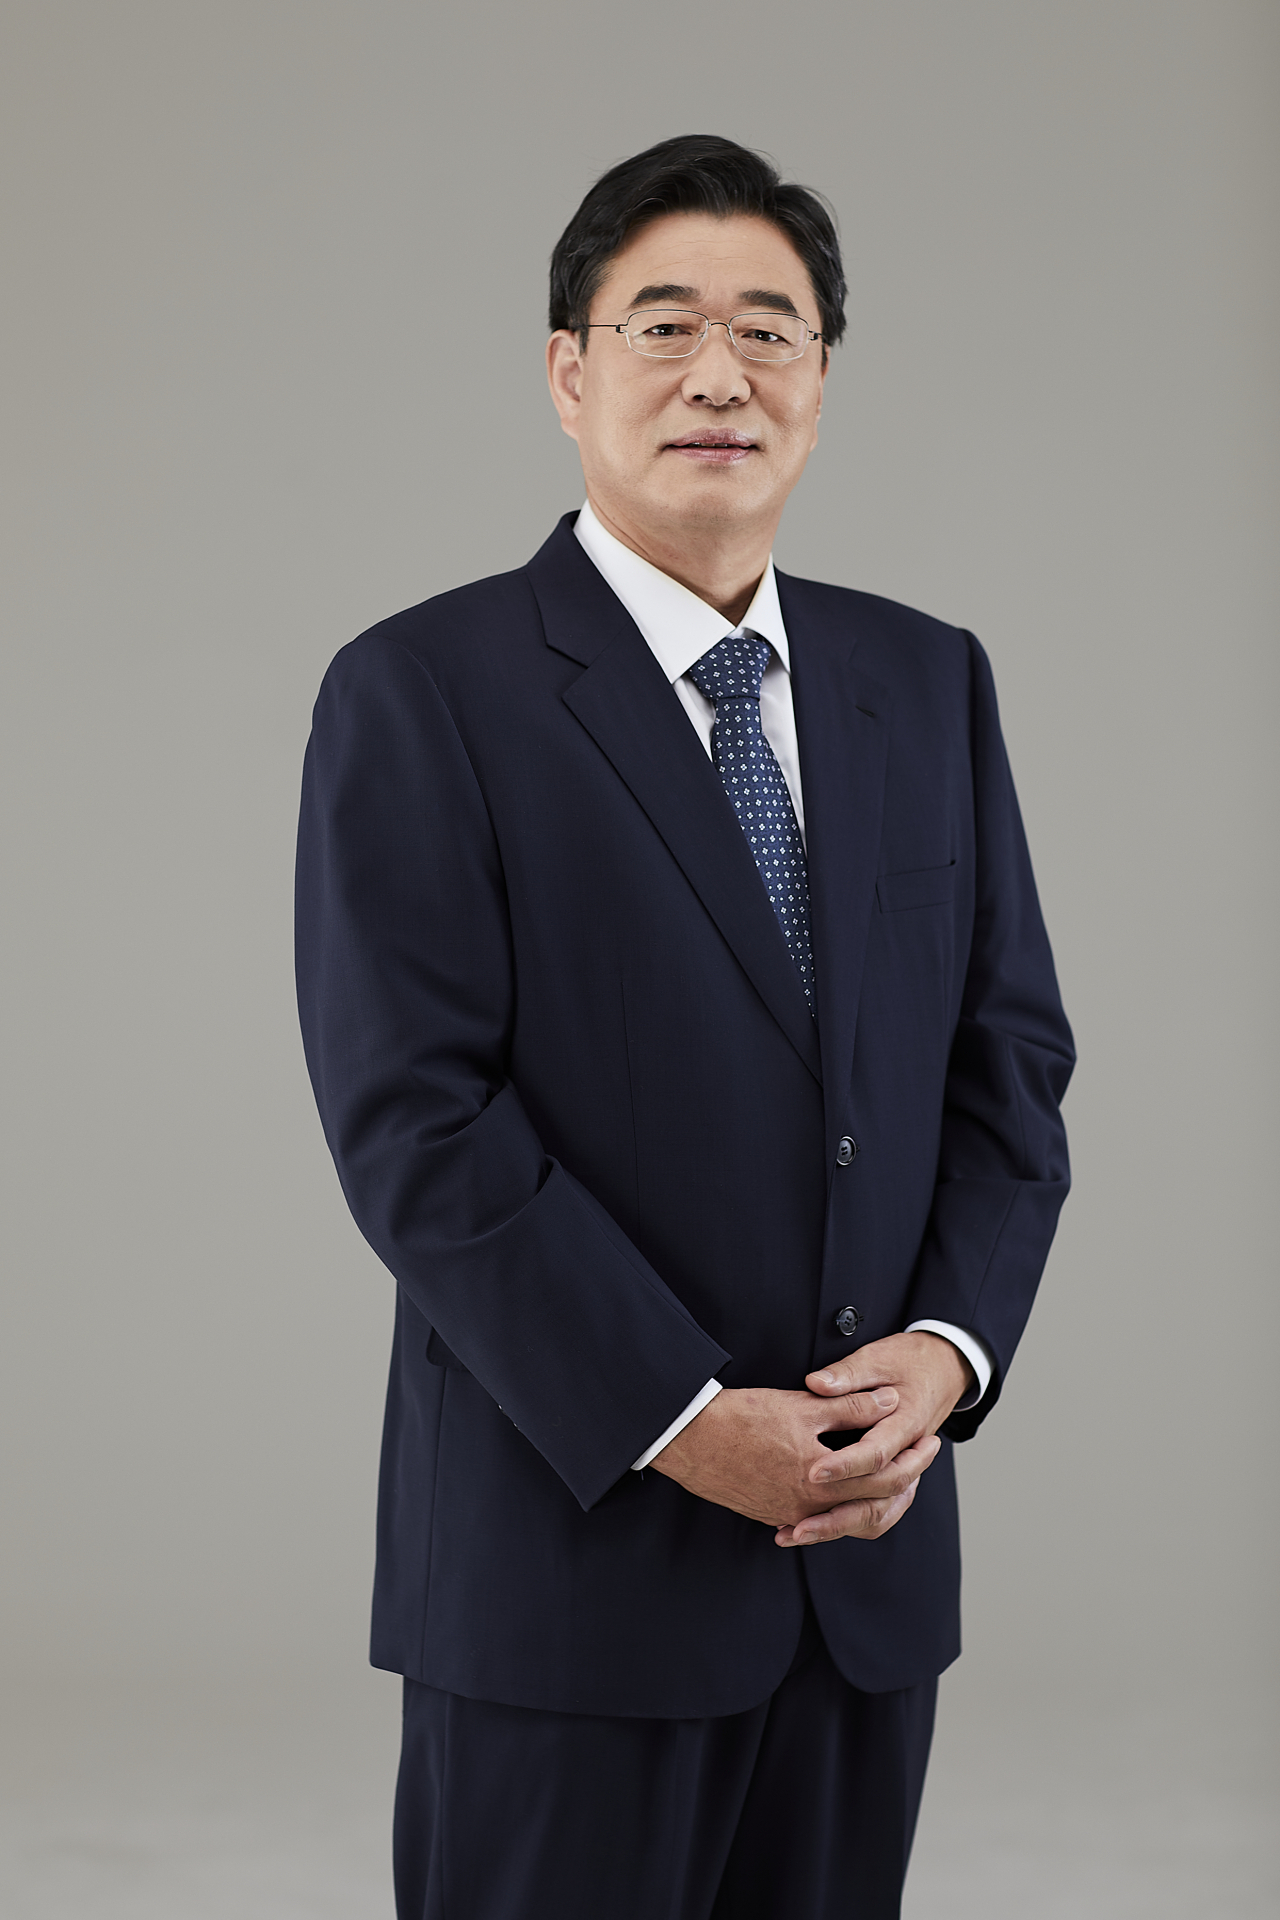 Korea Health Promotion Institute Director Cho Hyun-jang